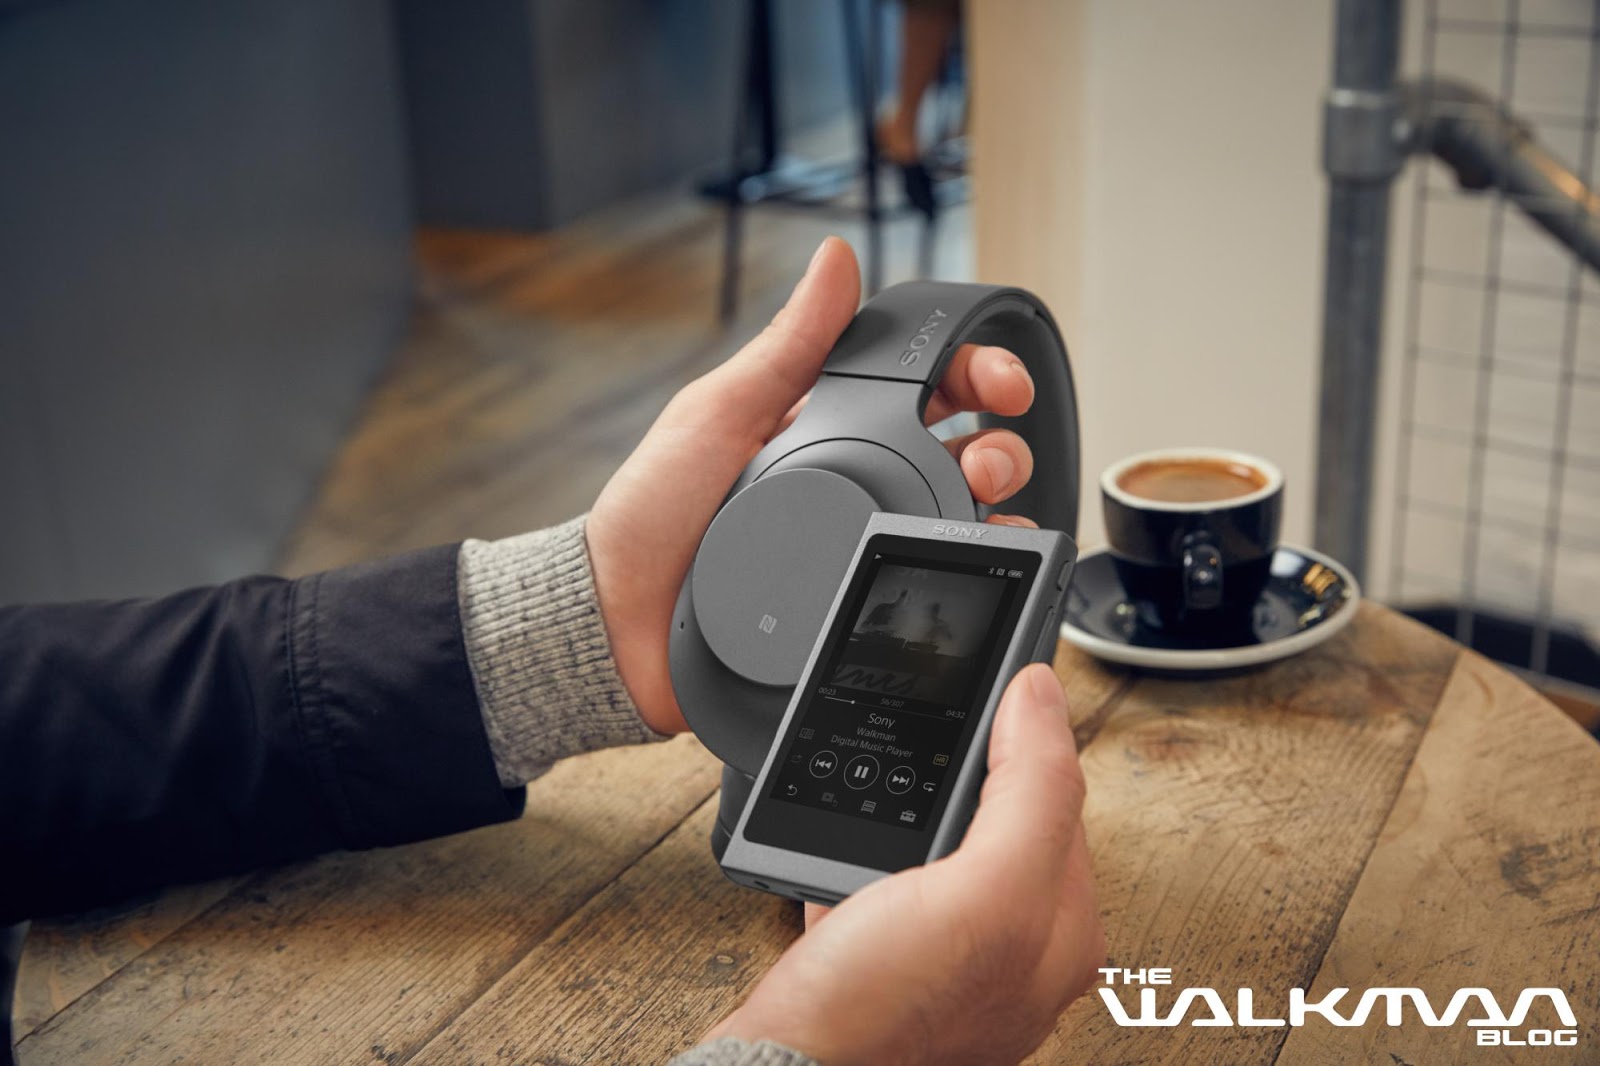 Sony NW-A40 Walkman debuts at IFA 2017 - The Walkman Blog